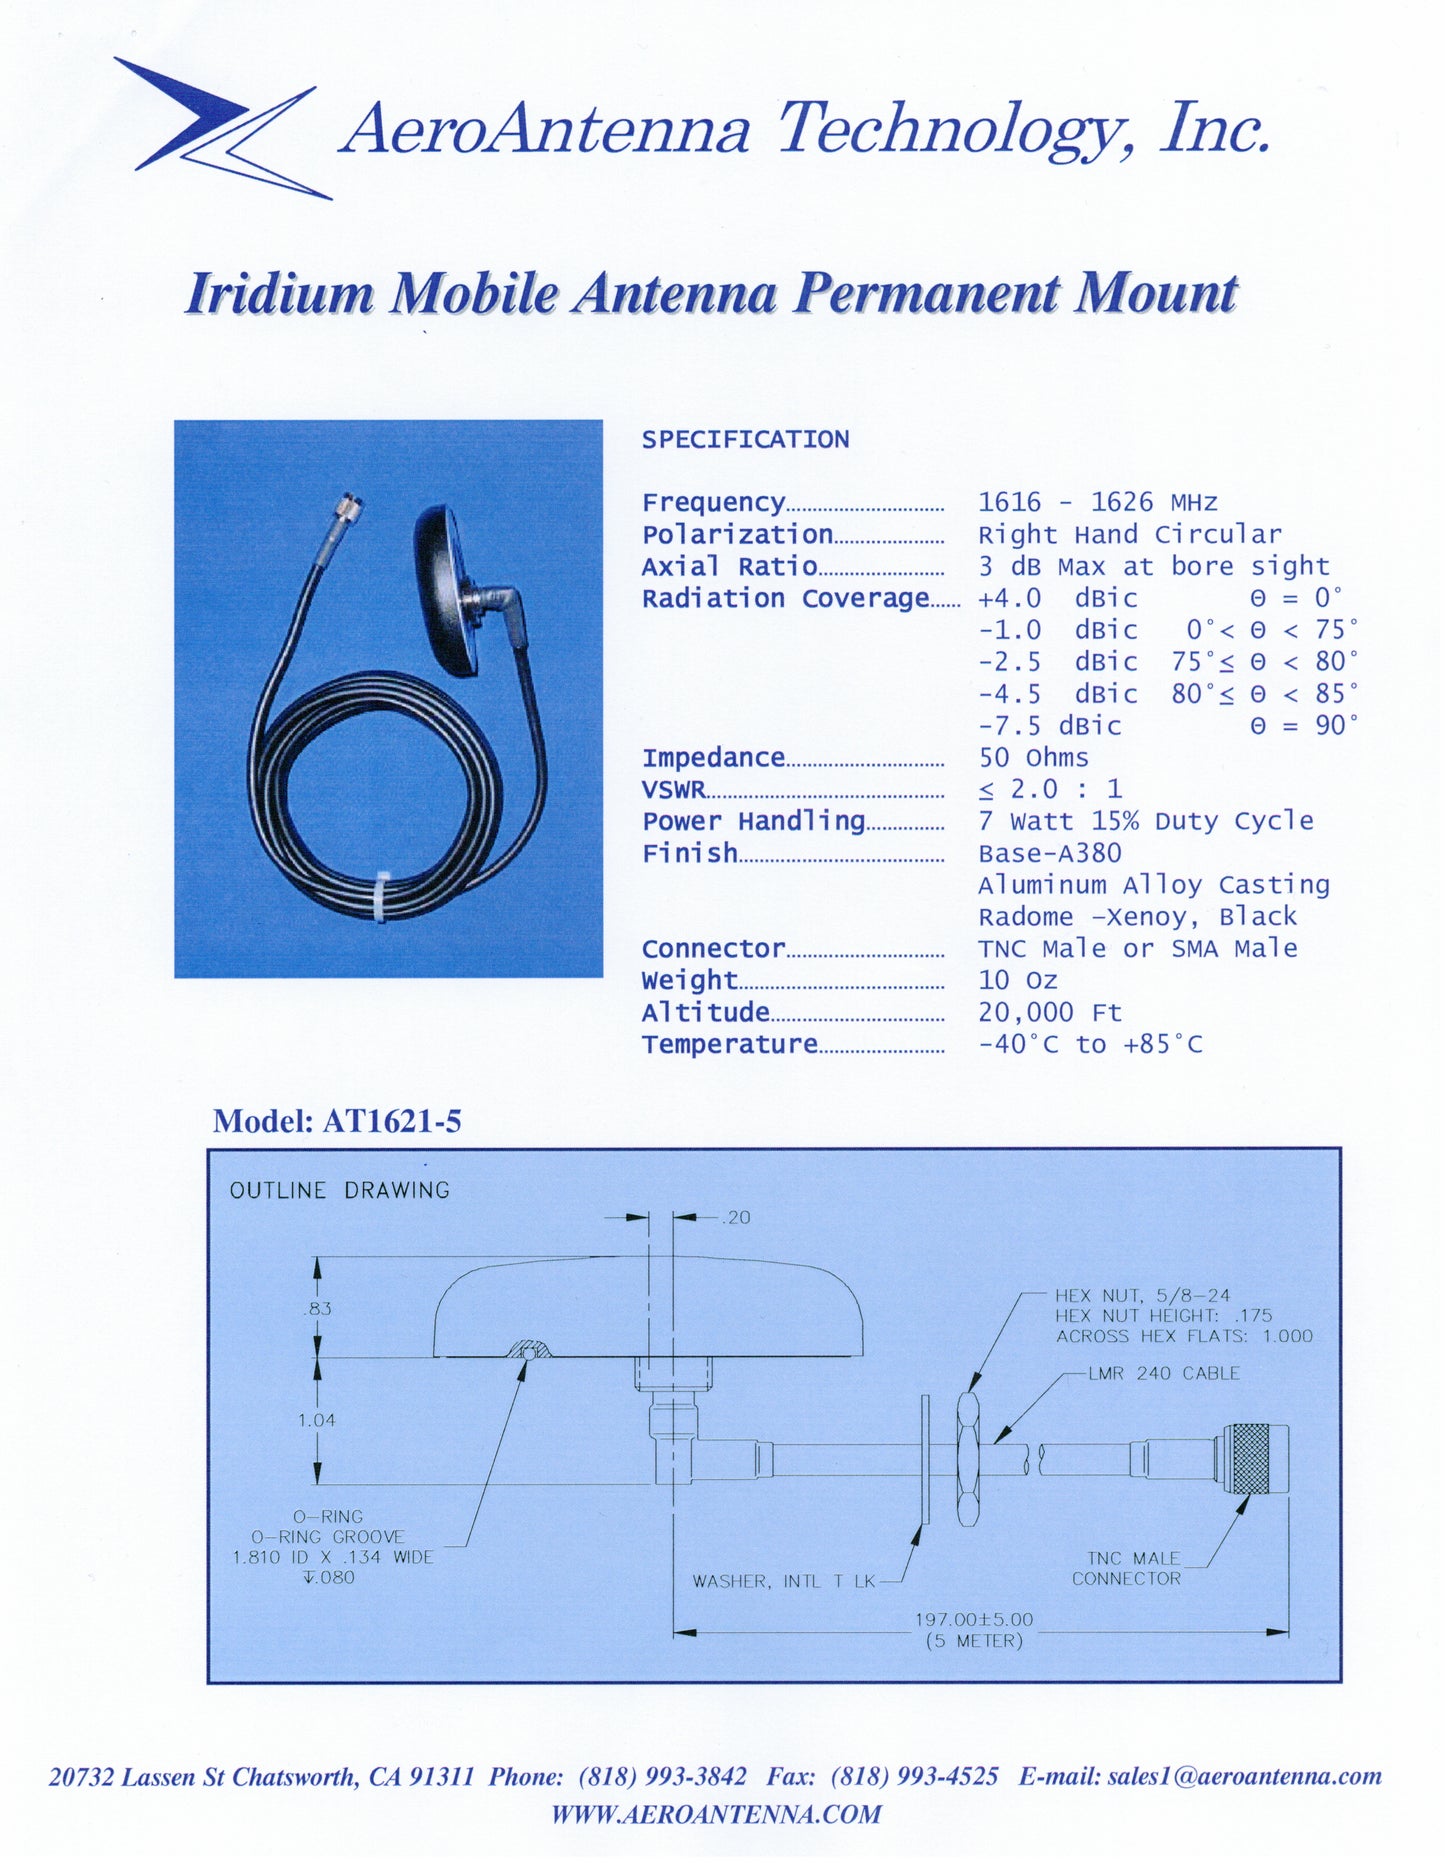 Iridium Mobile Antenna - Permanent Mount